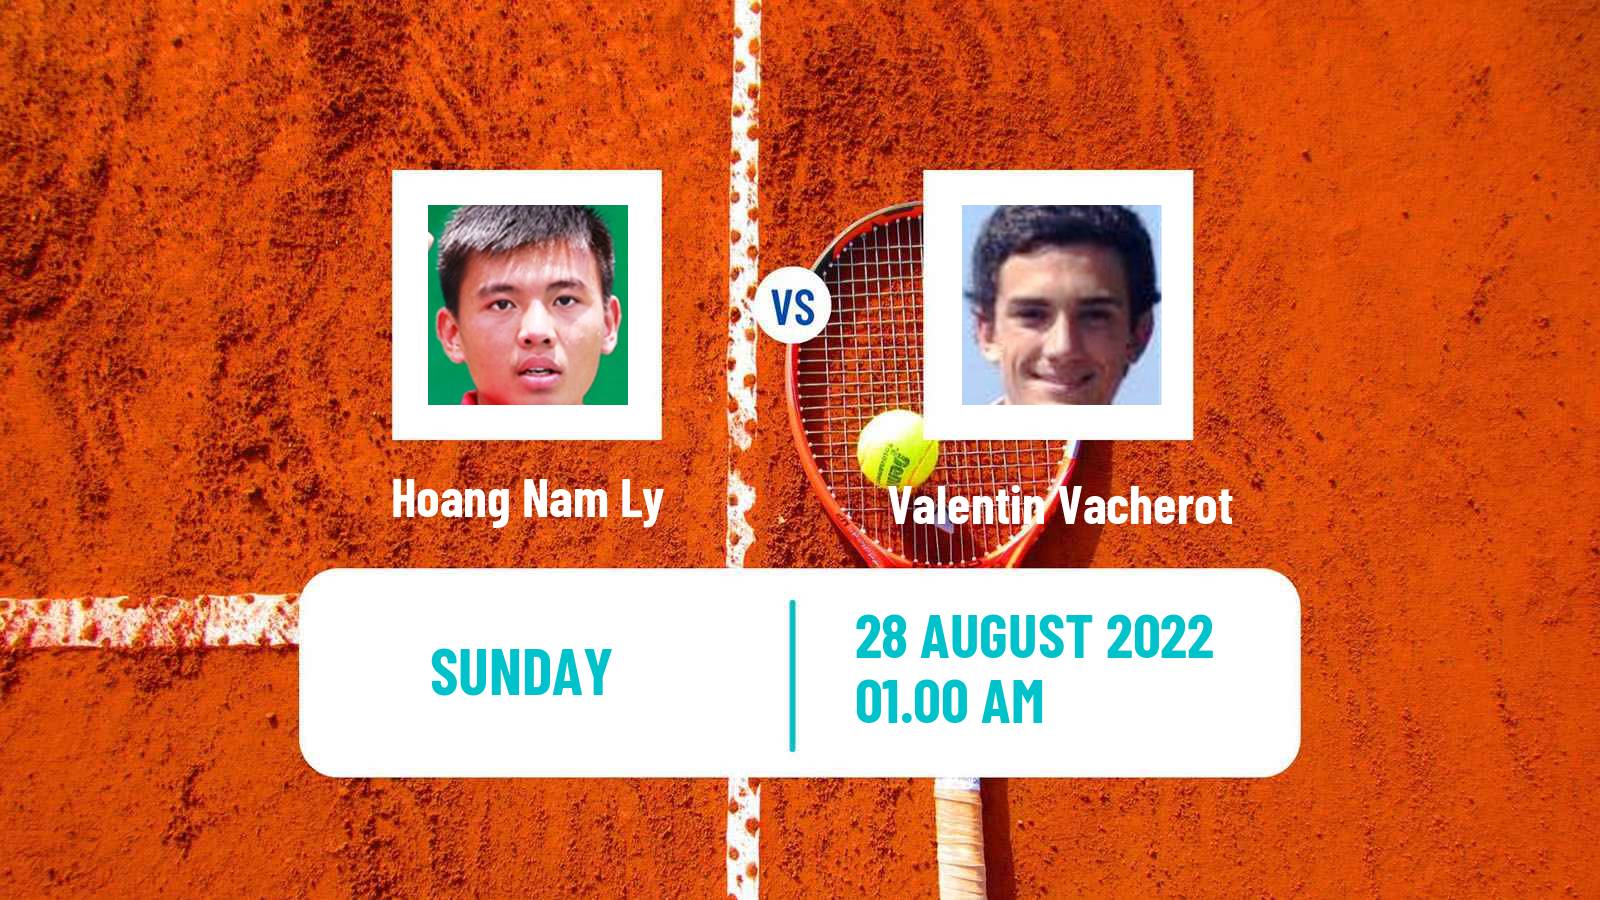 Tennis ATP Challenger Hoang Nam Ly - Valentin Vacherot